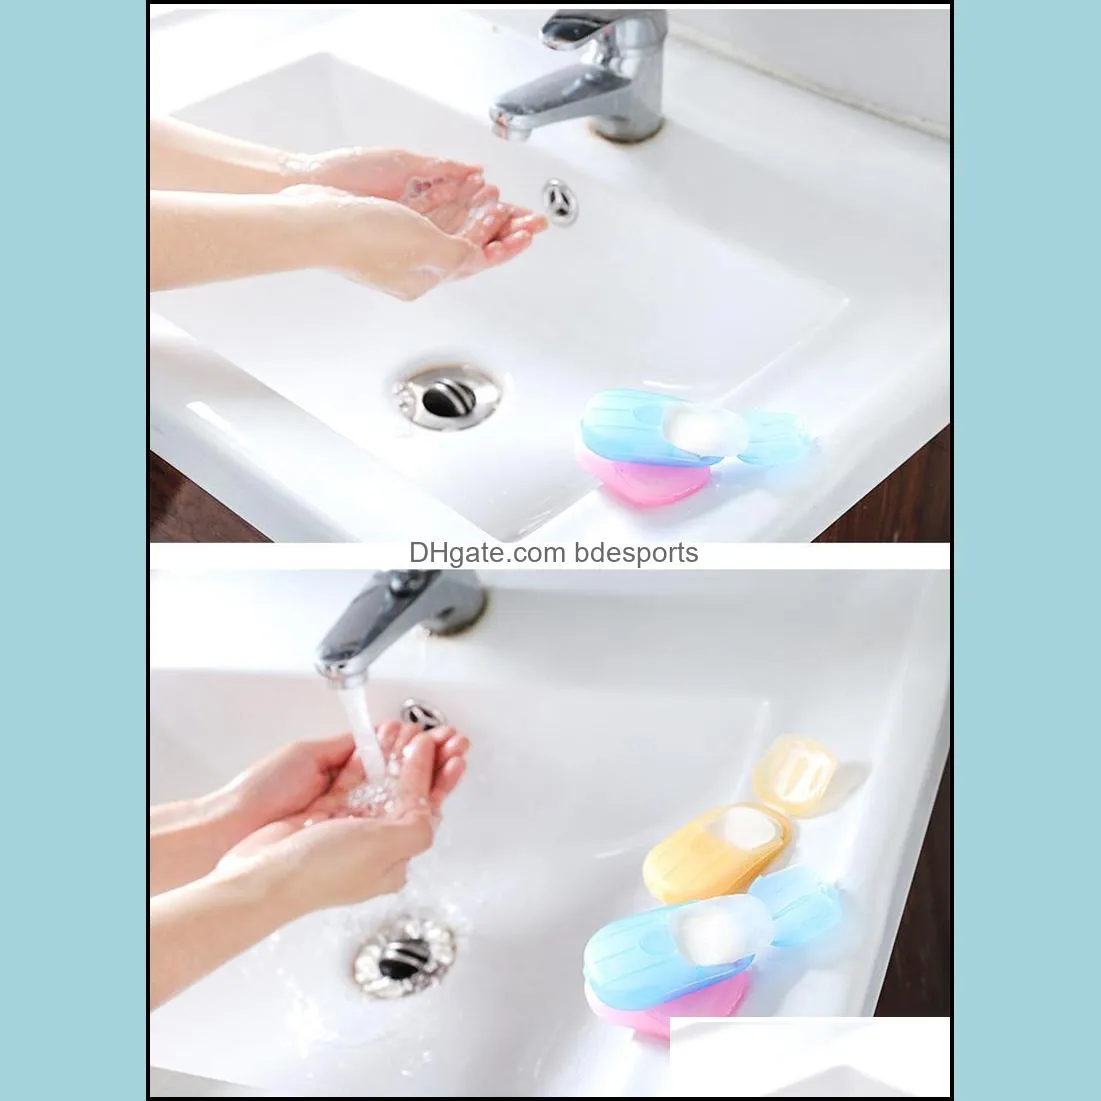 Disposable Boxed Soap Paper Portable Aromatherapy Hand Wash Bath Travel Mini Soap Box Anti Bacterial Soap Sheet Bathroom Accessories